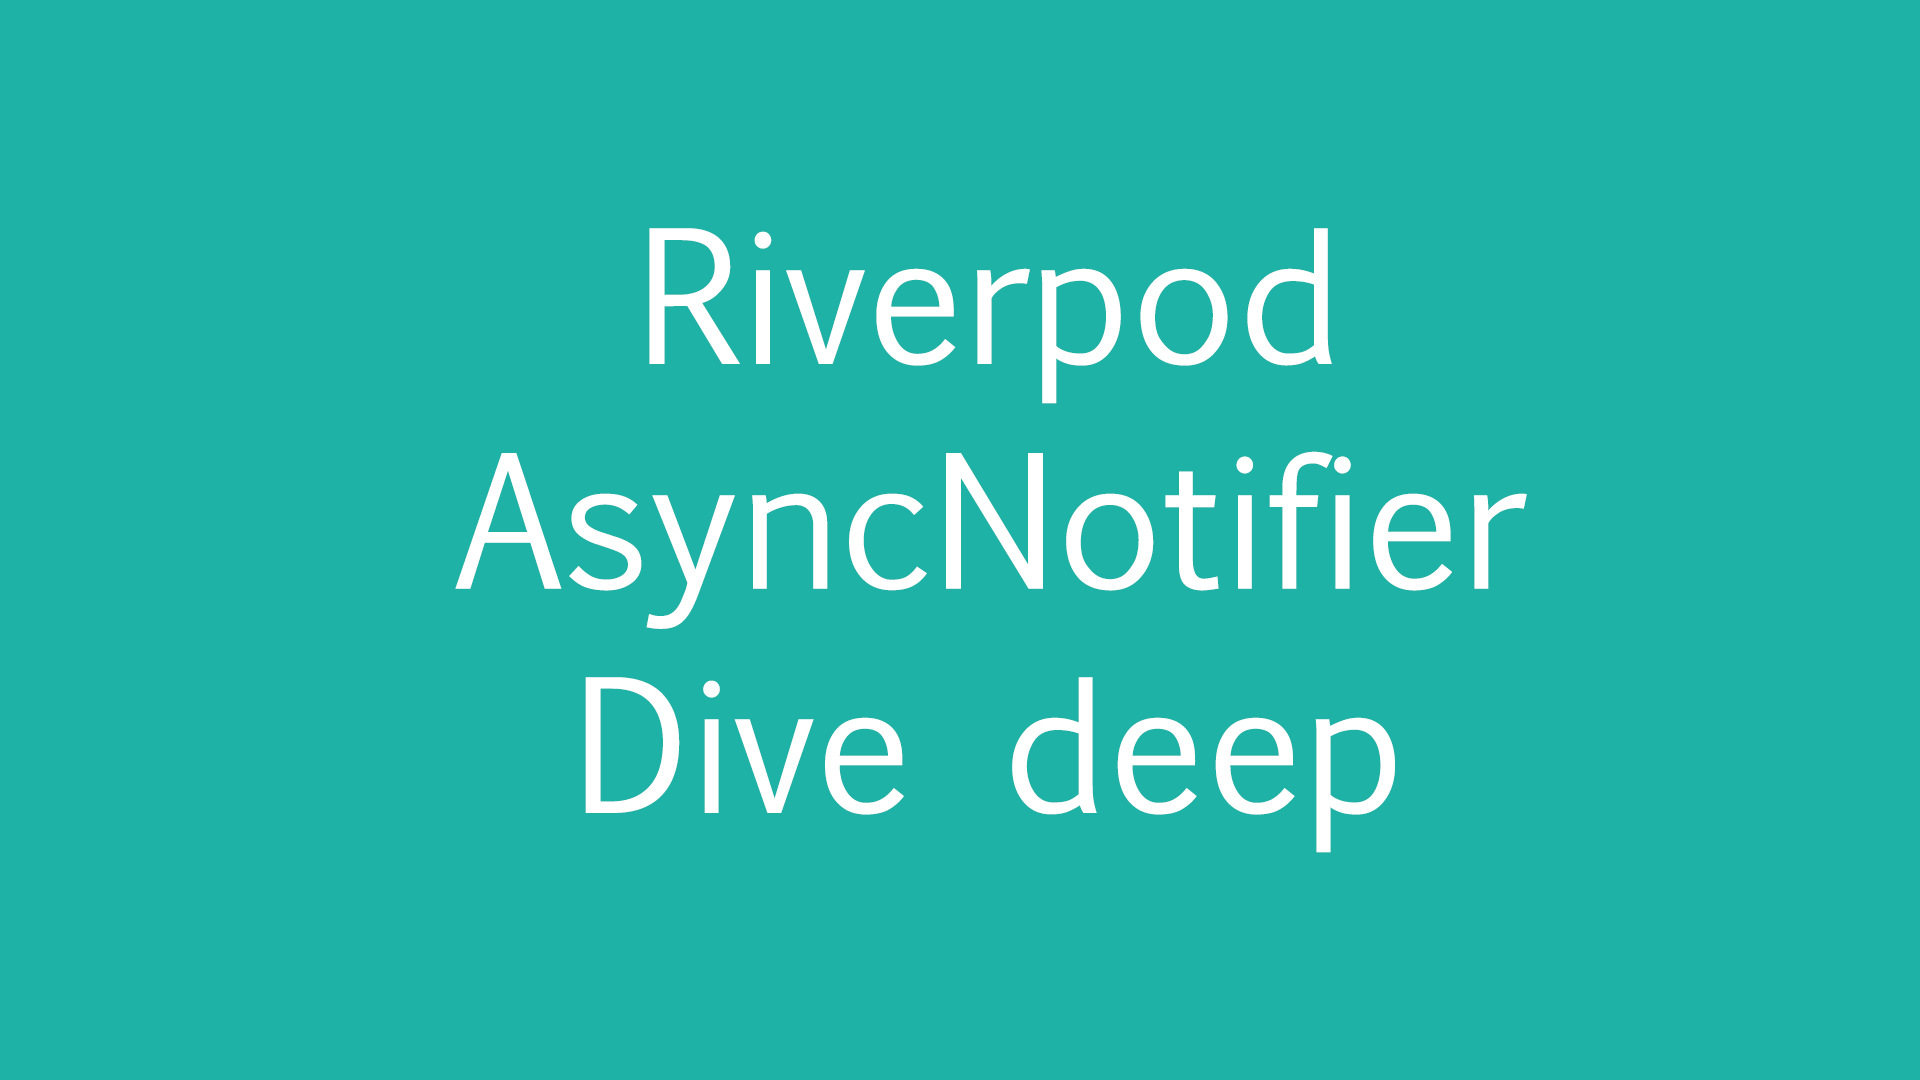 Riverpod AsyncNotifier Explained